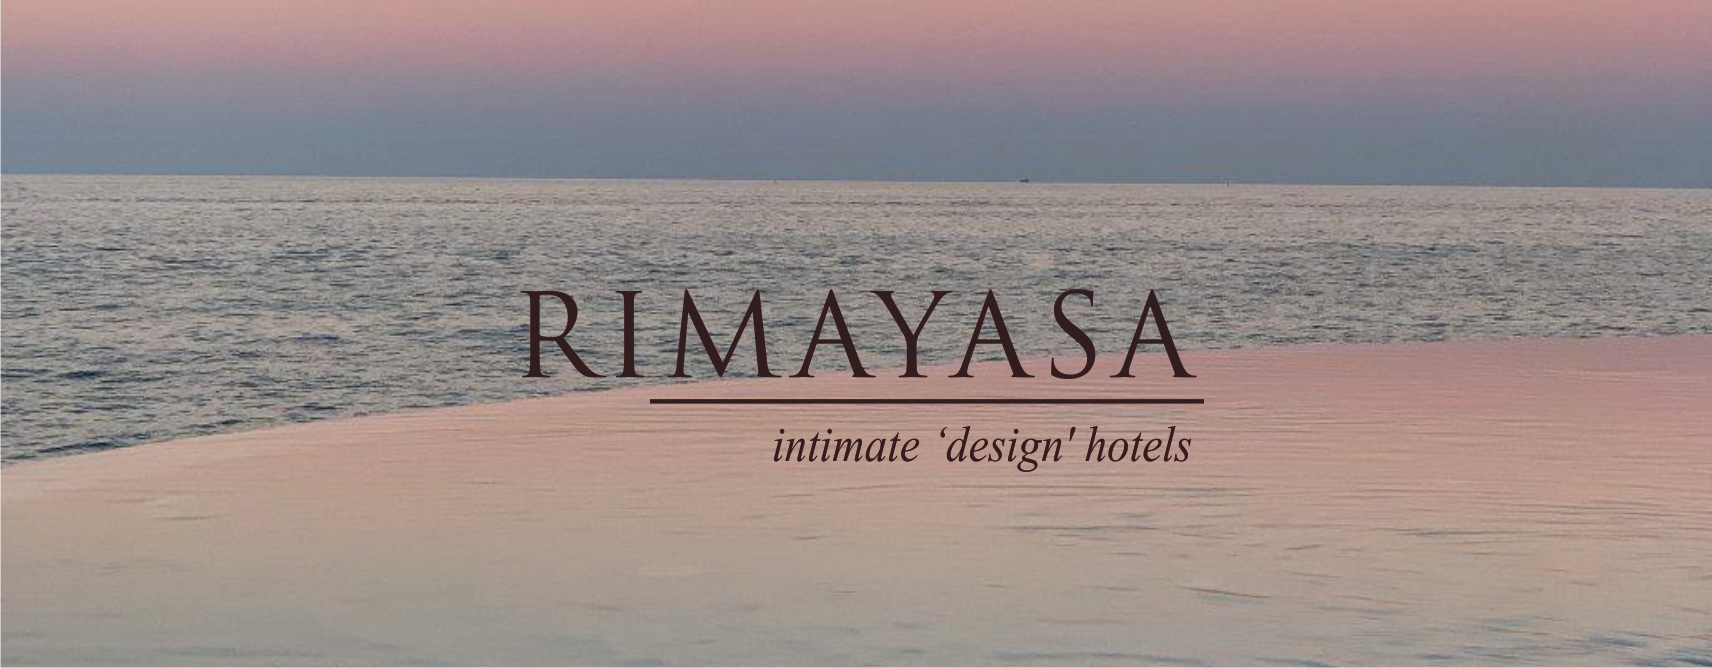 Rimayasa Hotels - the intimate 'design' hotels